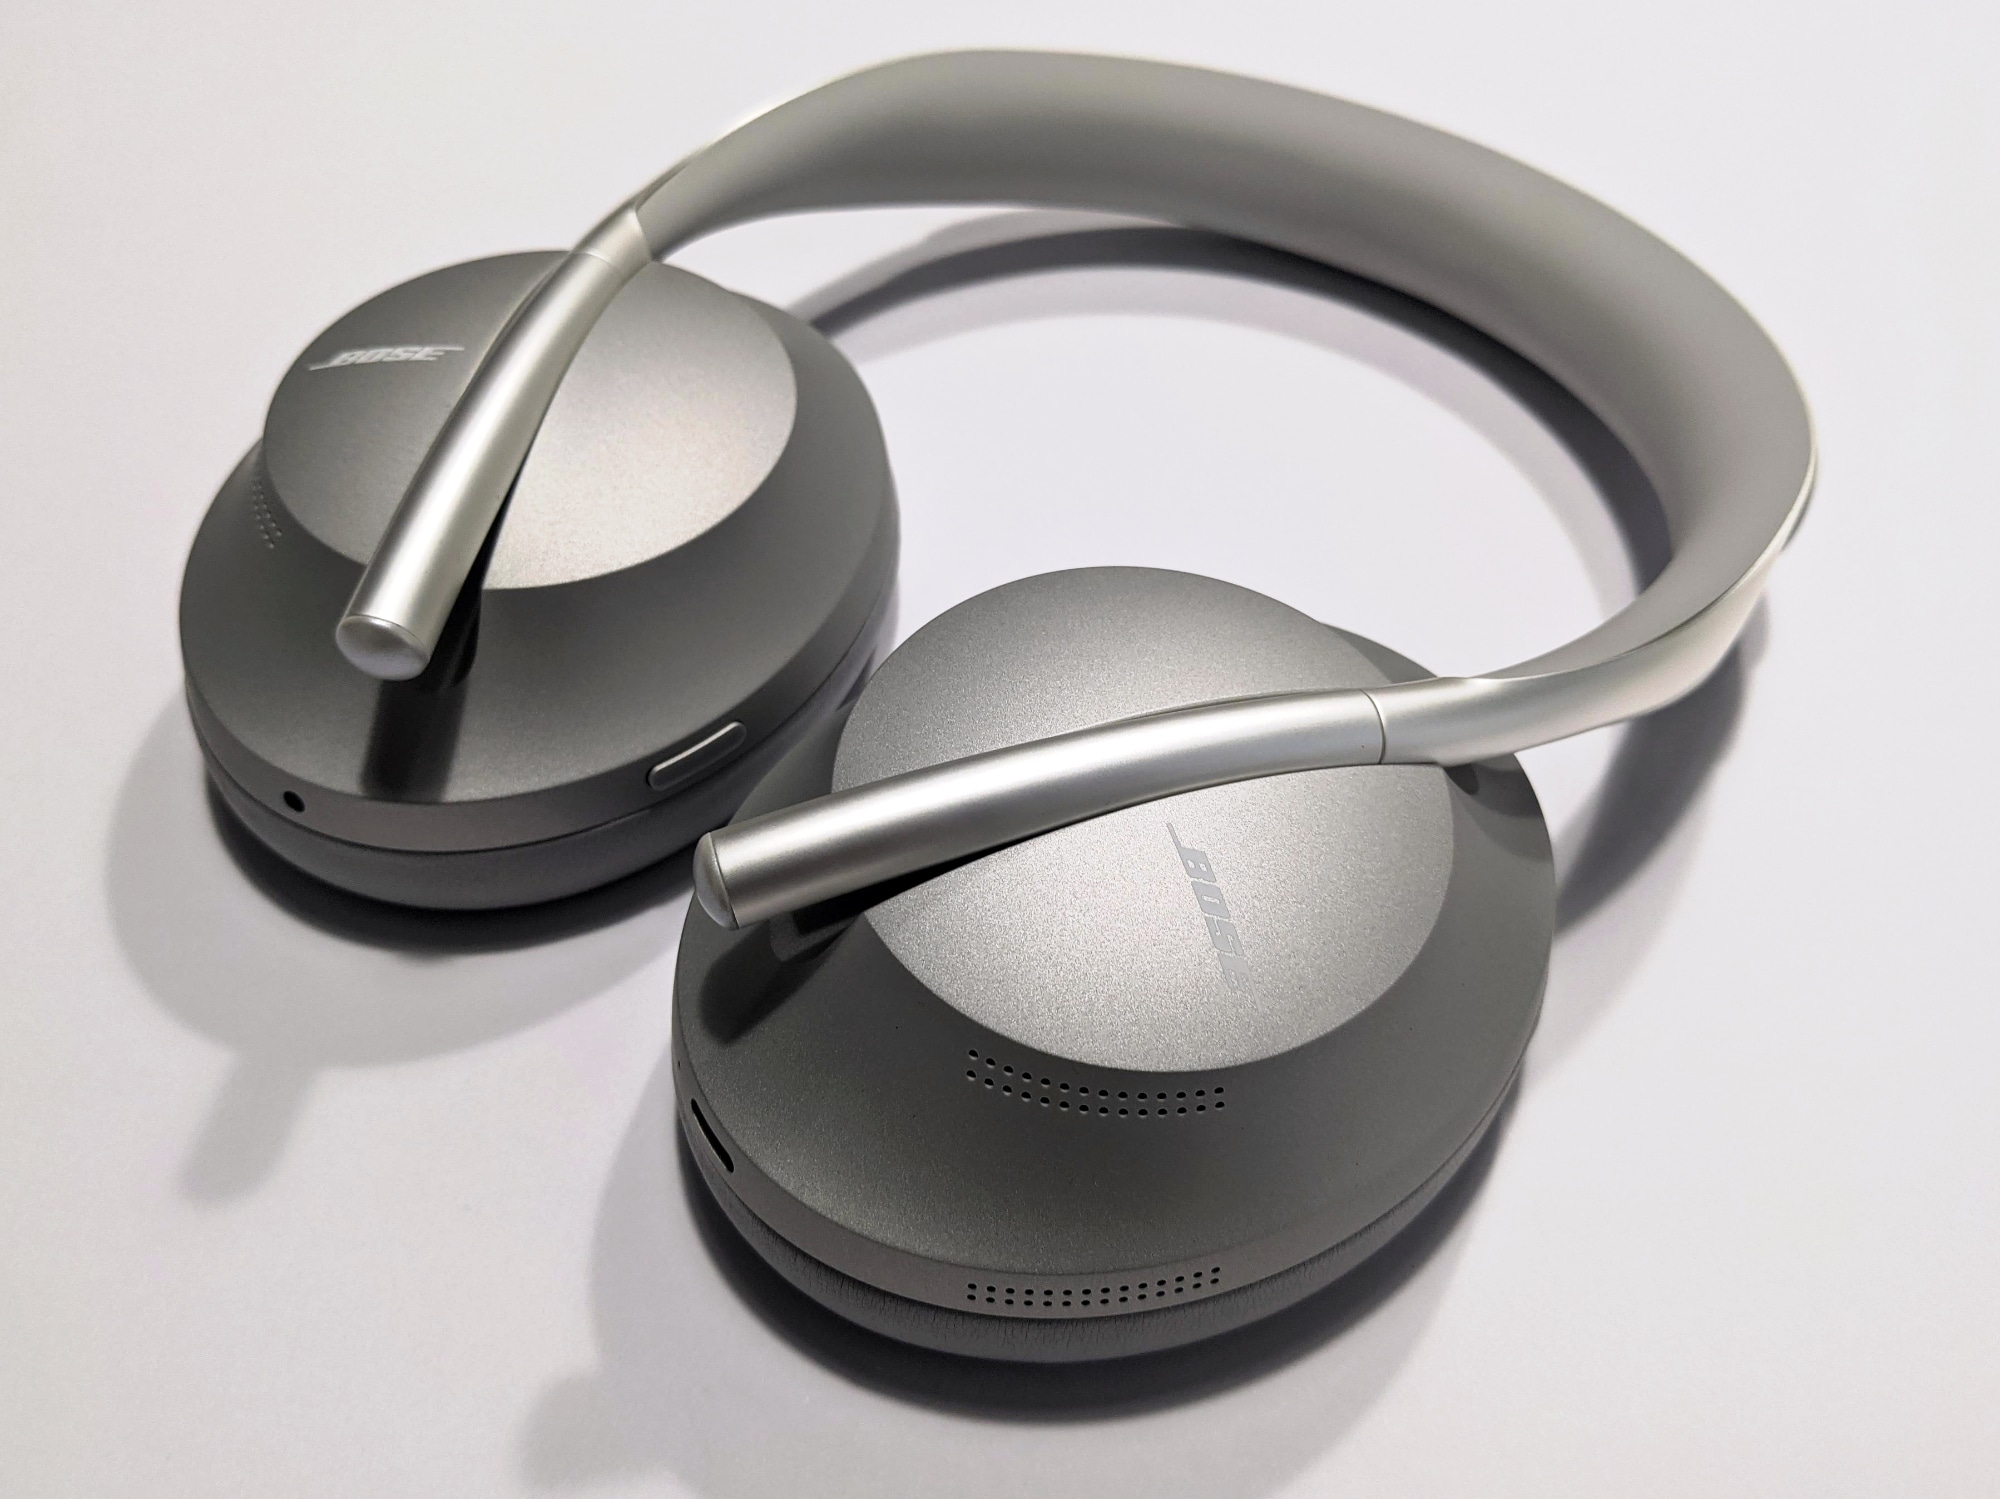 Noise Cancelling Headphones 700 - Bose's latest headphone series test